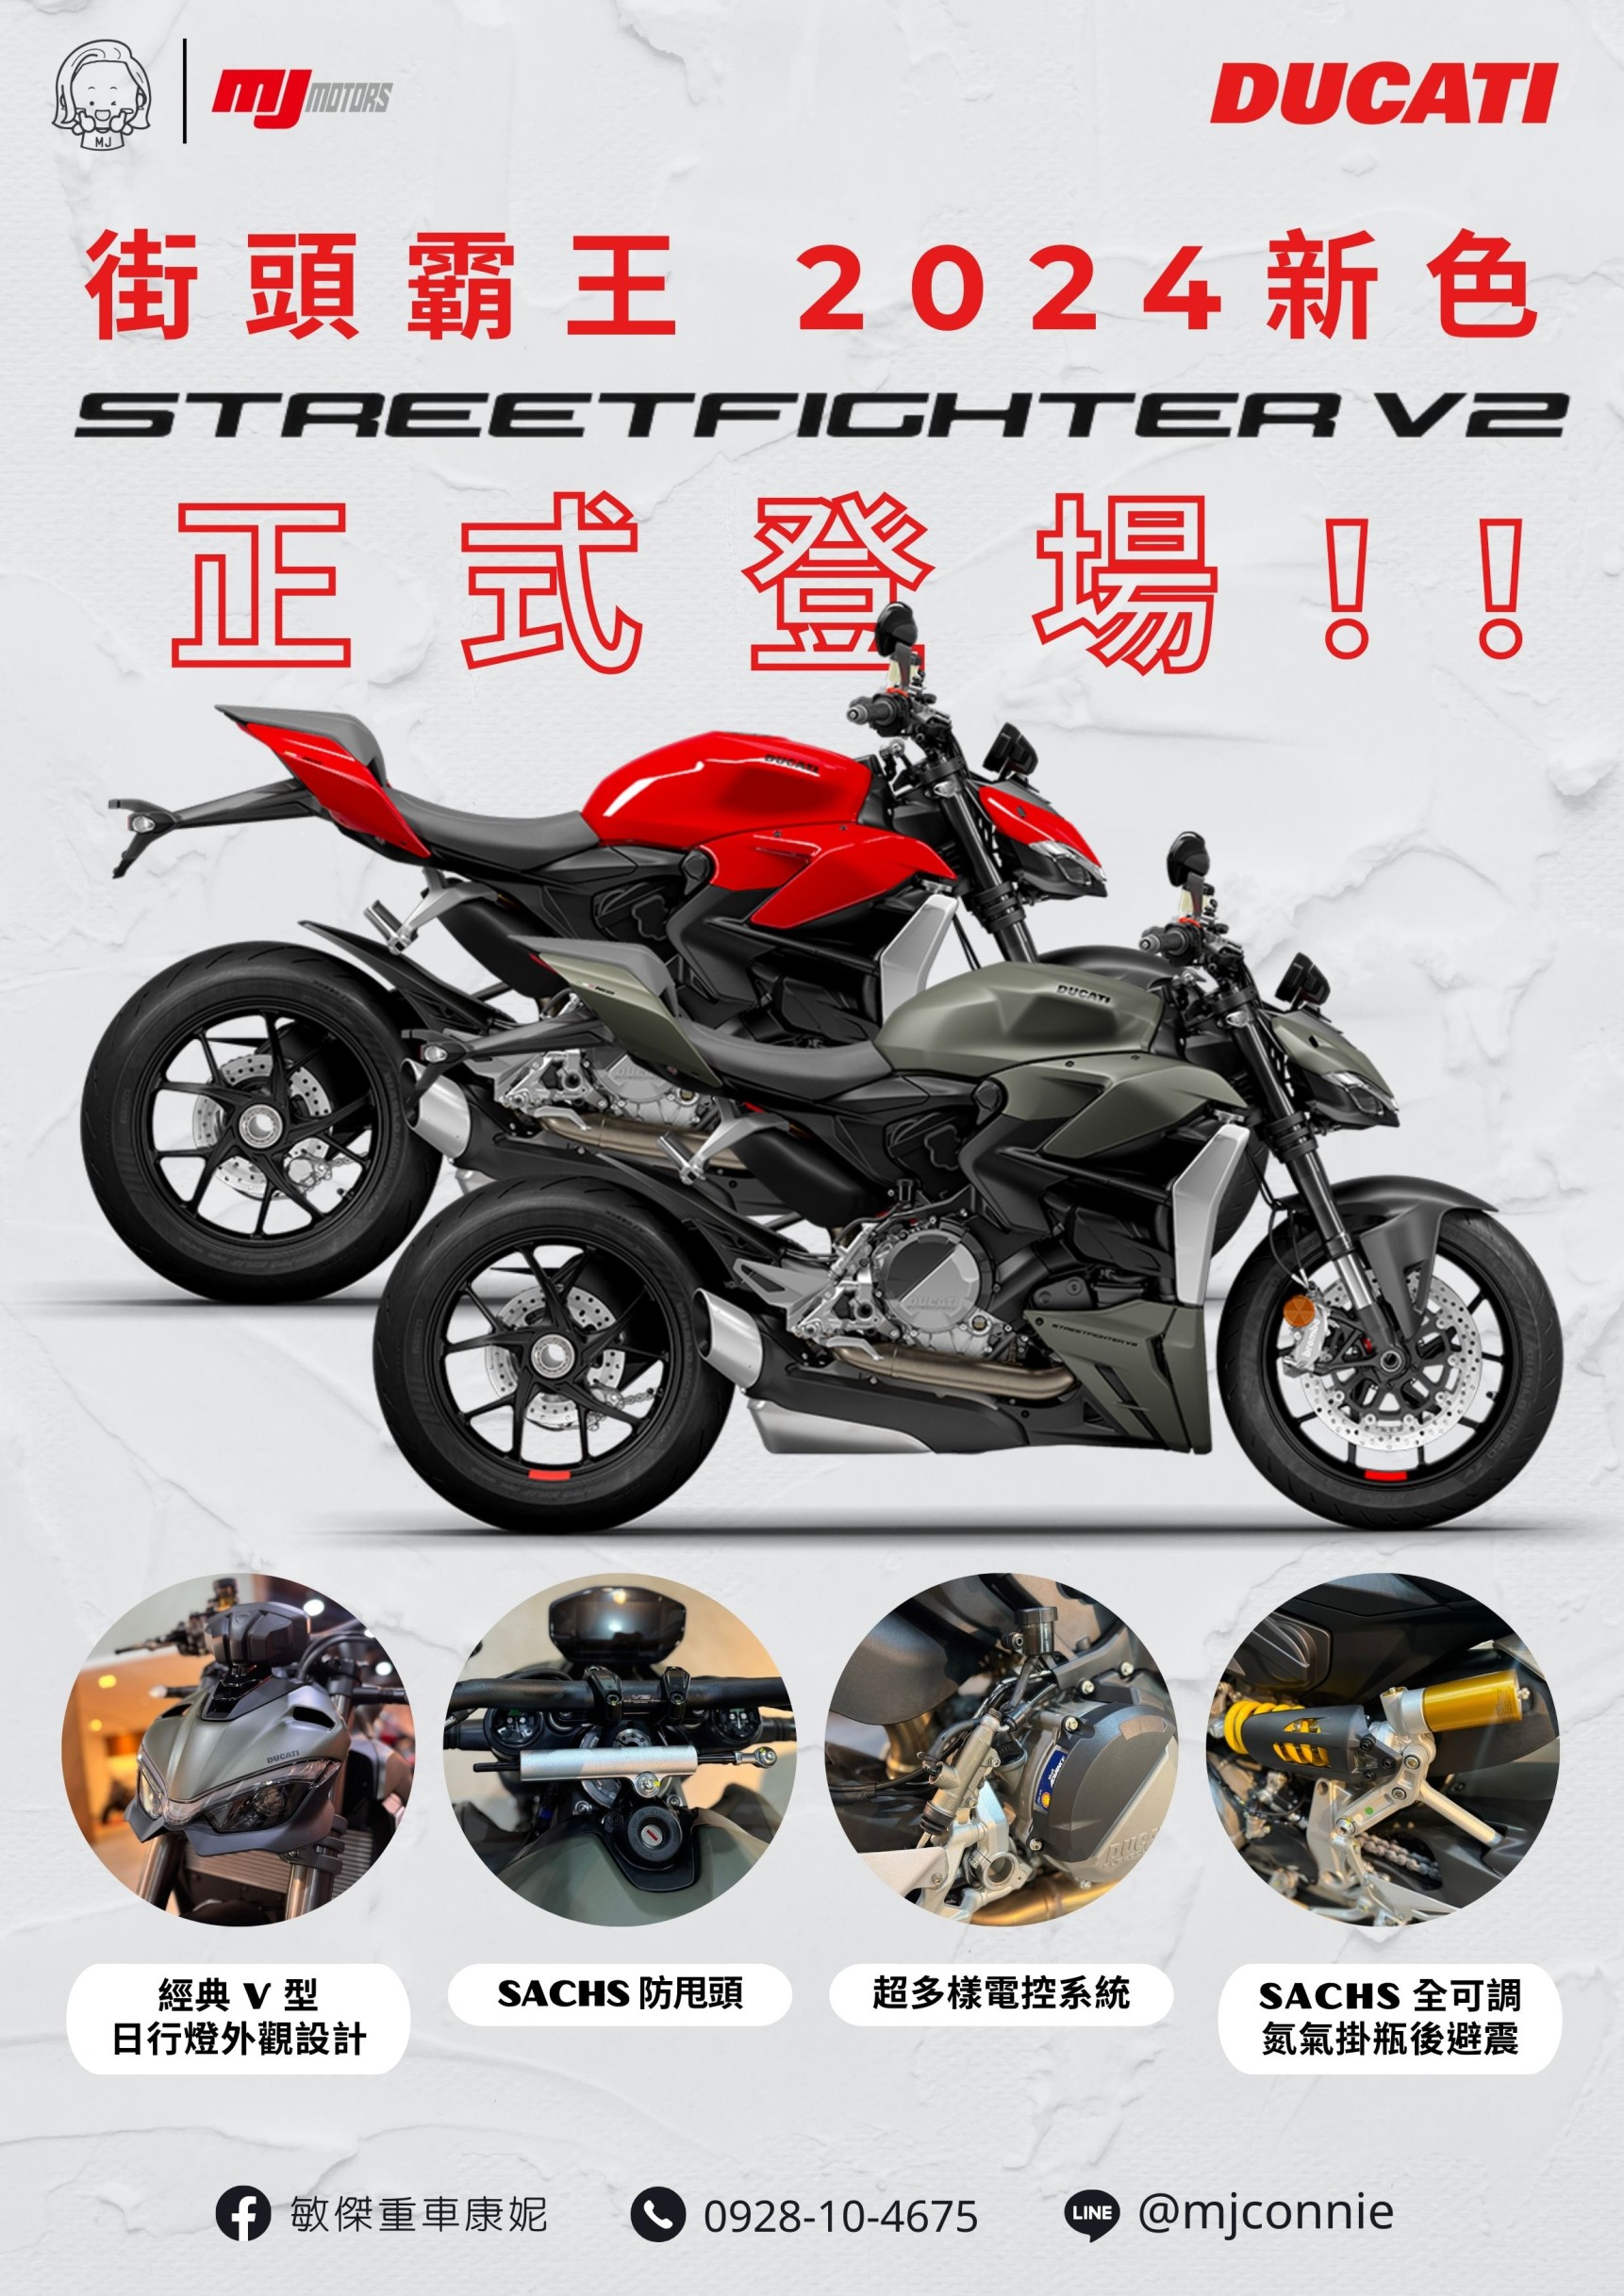 DUCATI STREETFIGHTER V4 S新車出售中 『敏傑康妮』Ducati StreetFighter V2 StreetFighter V4s 現車現領 不用等!!! | 敏傑車業資深銷售專員 康妮 Connie